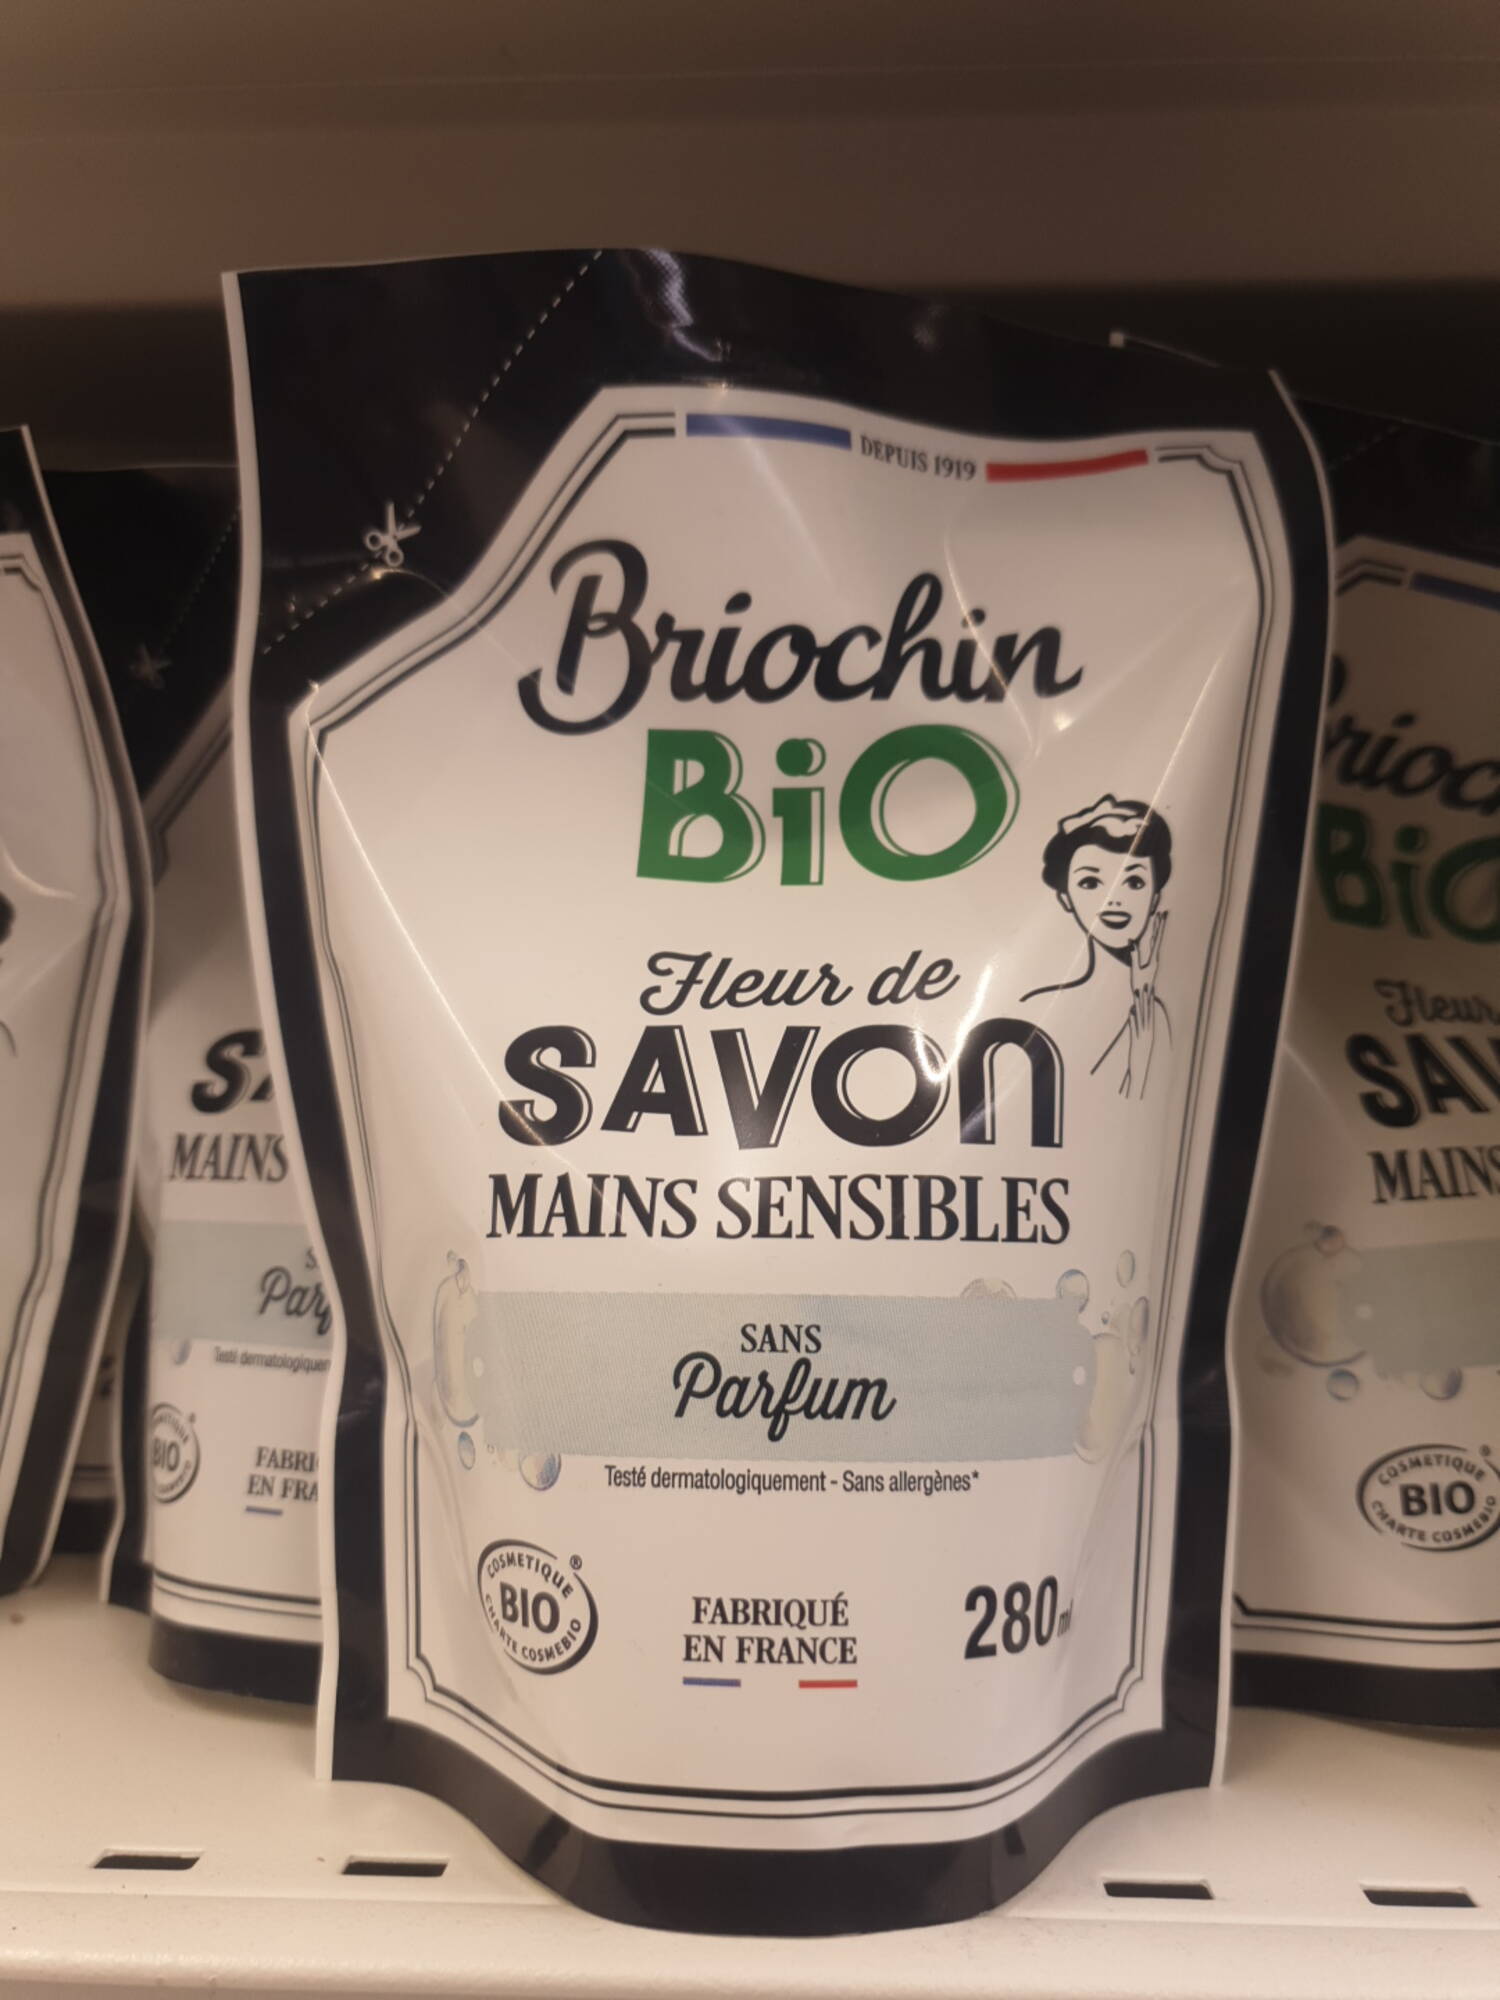 BRIOCHIN - Bio - Fleur de savon mains sensibles sans parfum